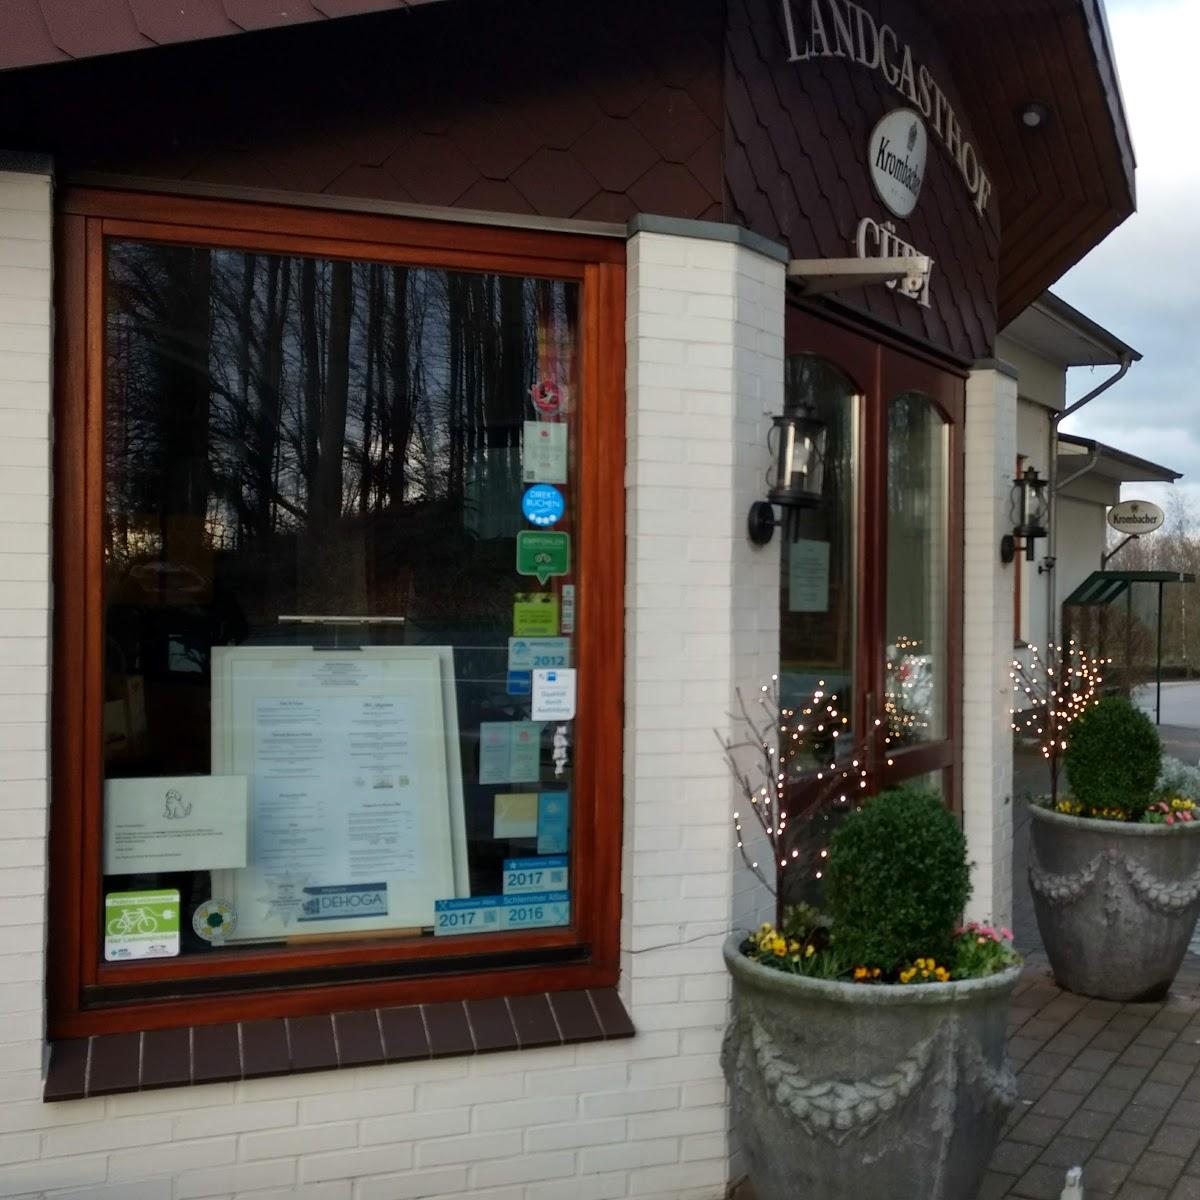 Restaurant "Landgasthof" in  Güby